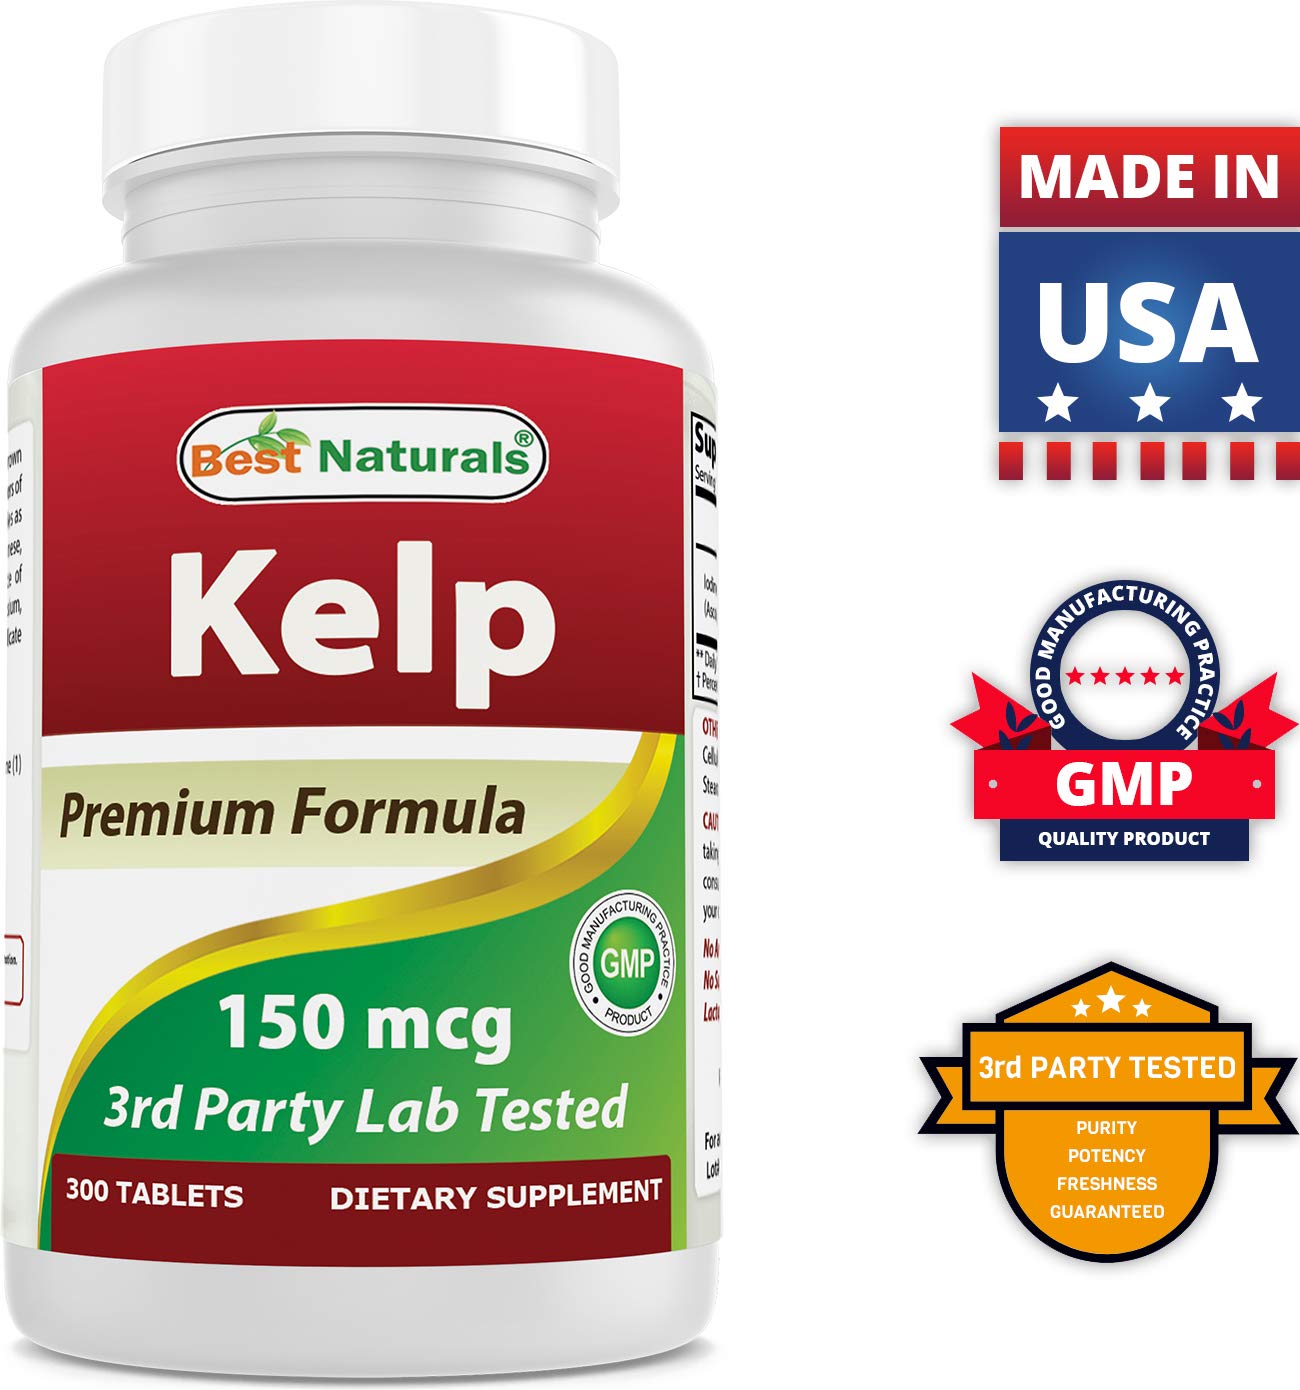 Kelp Supplement 150 Mcg & Bromelain 500 mg